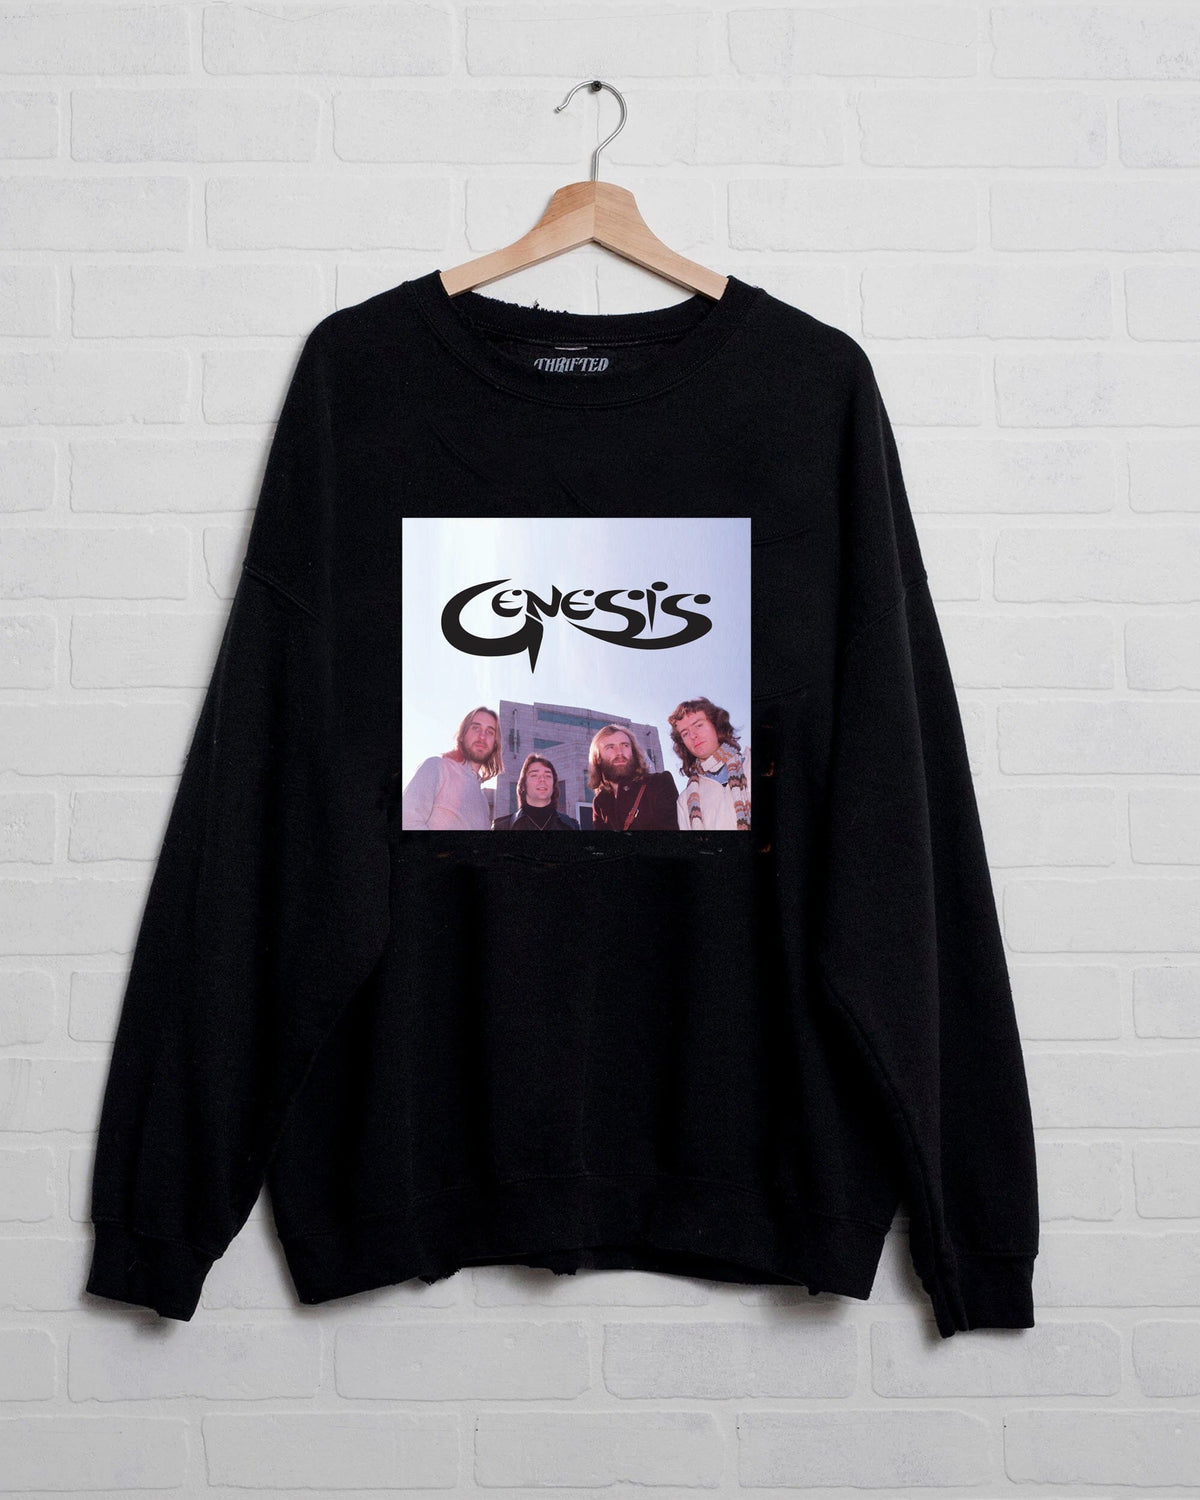 Genesis Pic Black Thrifted Sweatshirt